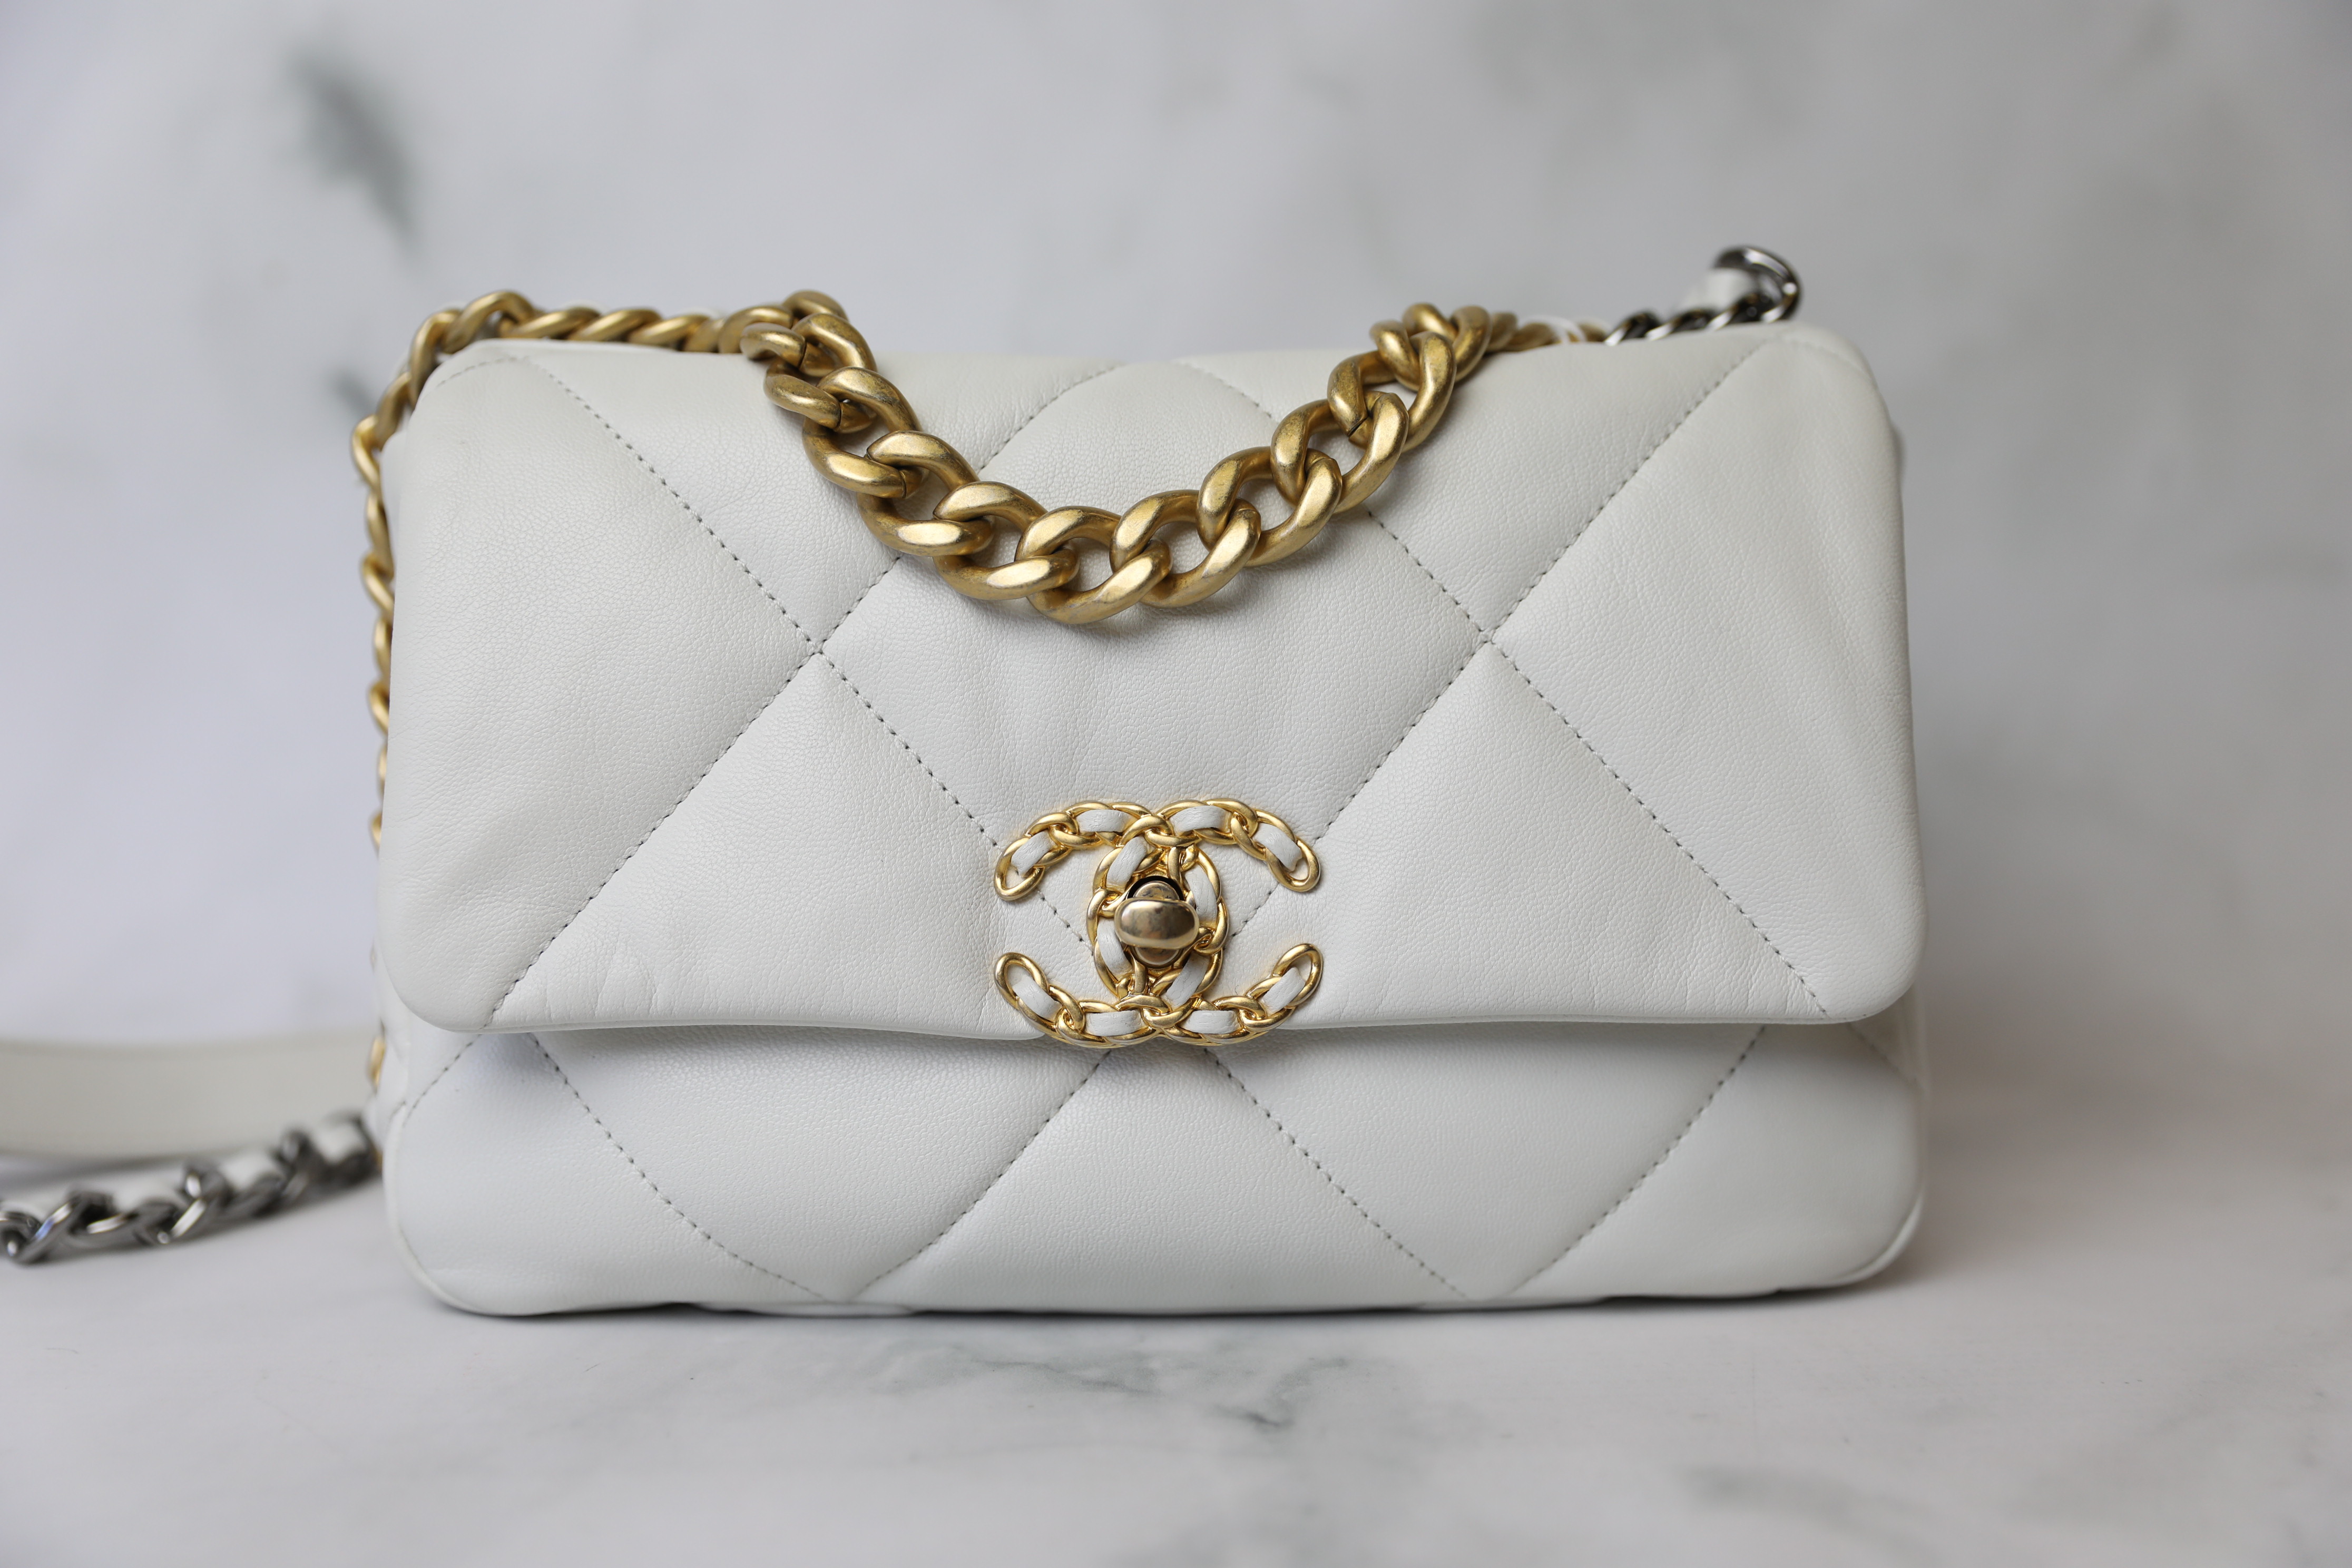 The story of my white Chanel 19 bag – Buy the goddamn bag